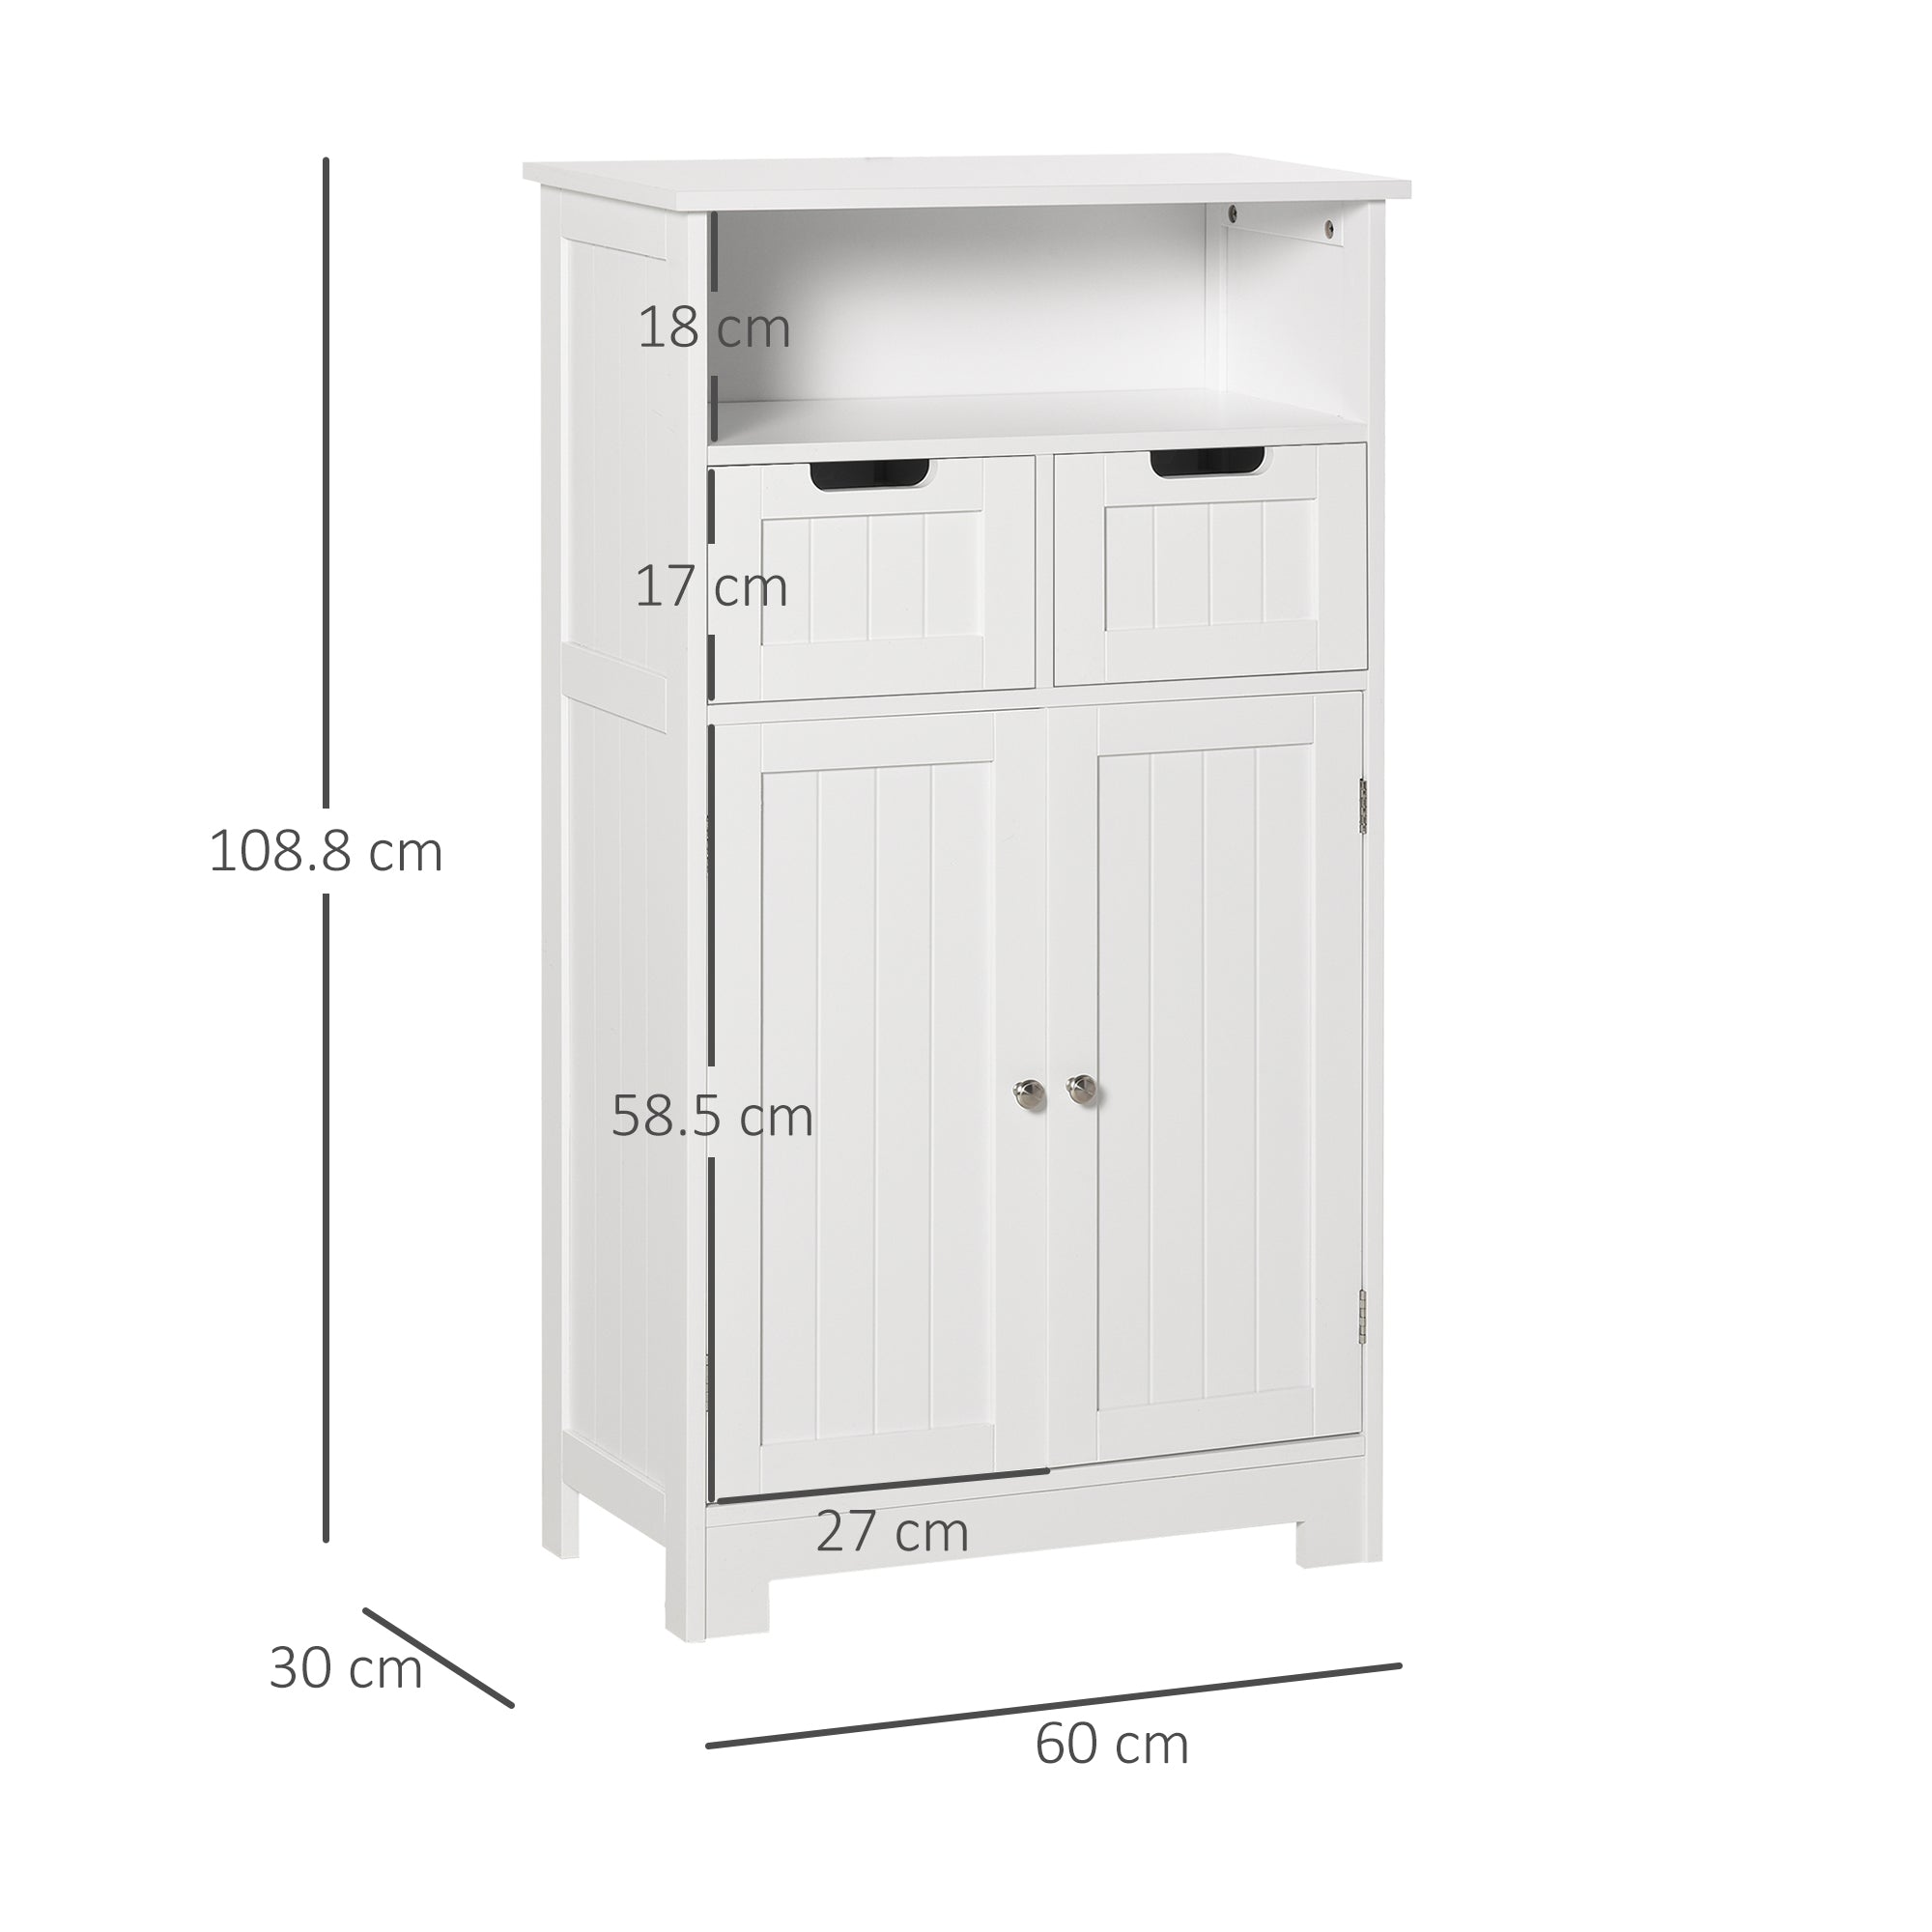 Freestanding Bathroom Cabinet, Narrow Freestanding Unit, Storage Cupboard Organizer with 2 Drawer Adjustable Shelf, White-2